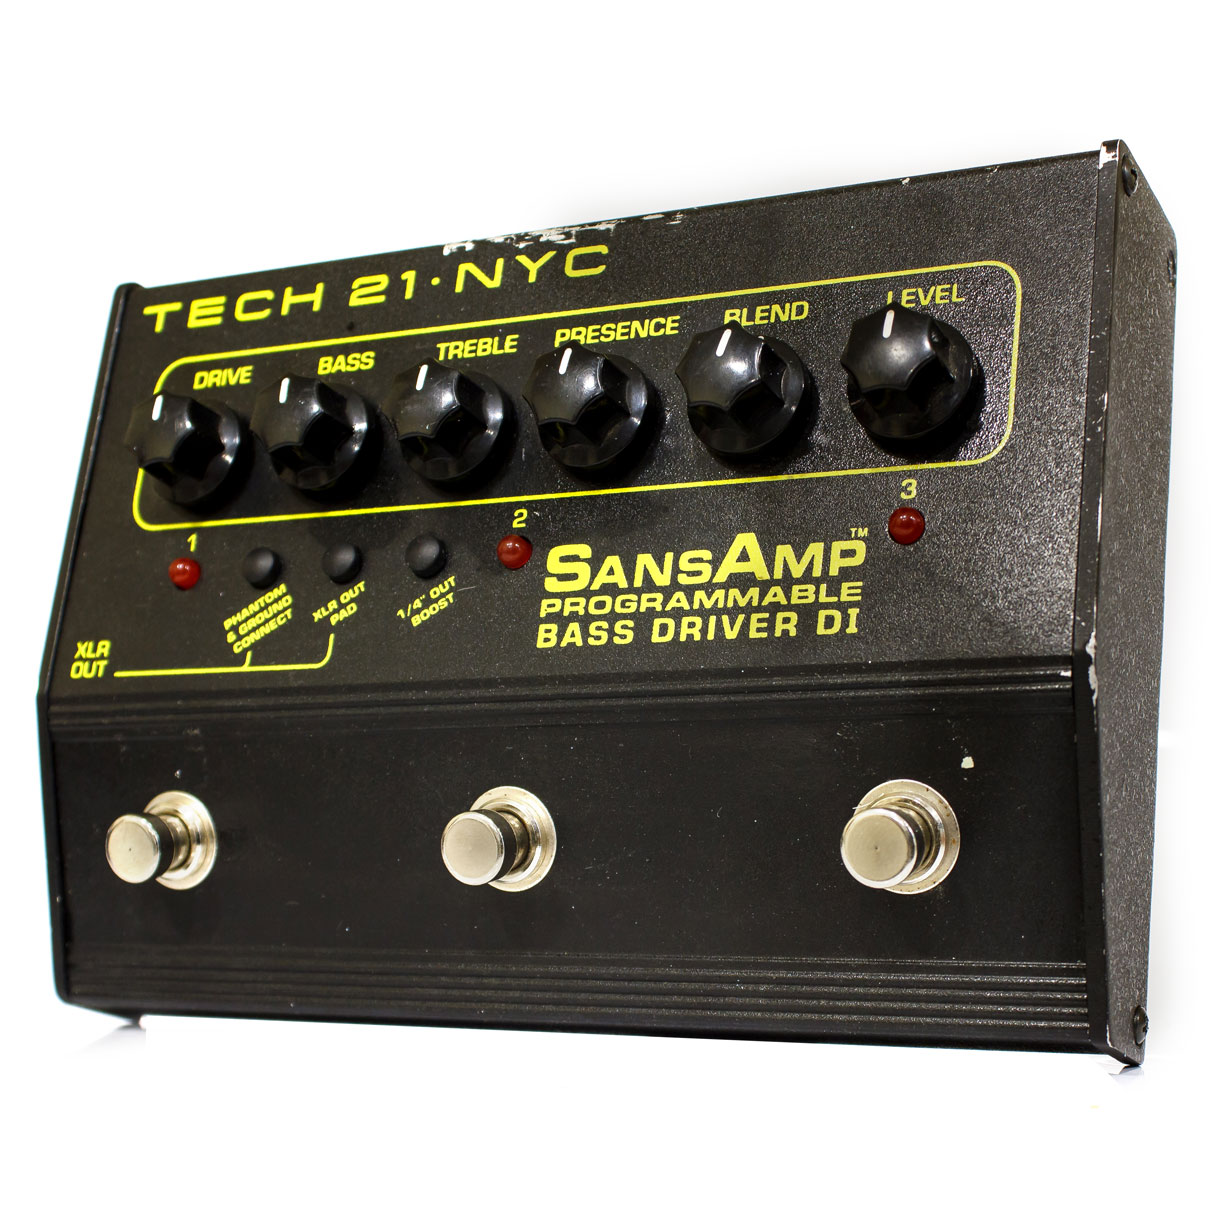 Tech 21 Sansamp Programmable Bass Driver DI (used) купить в Москве